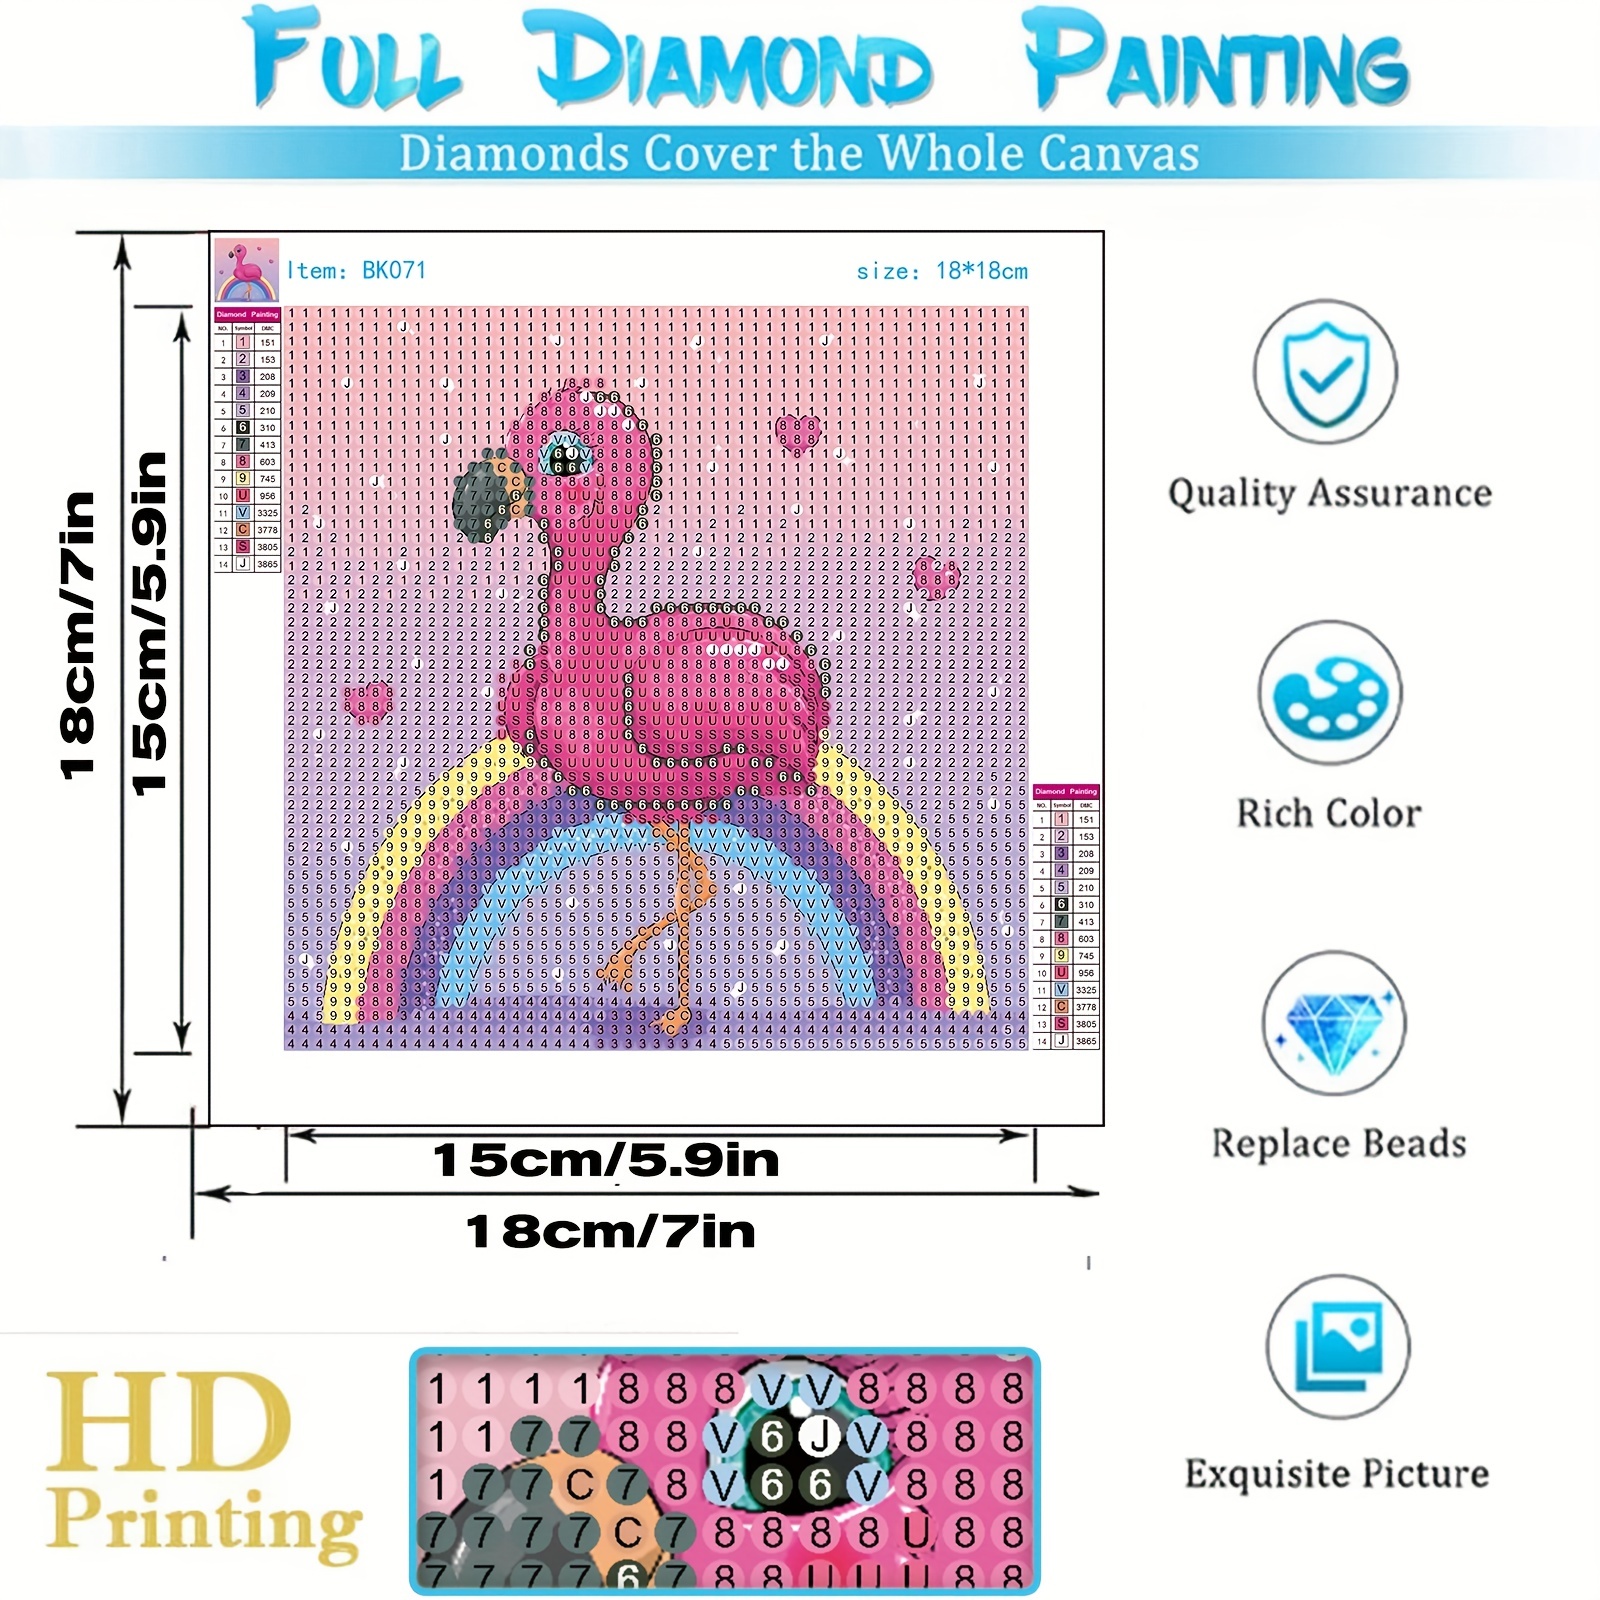 What are some good small diamond painting kits? : r/diamondpainting